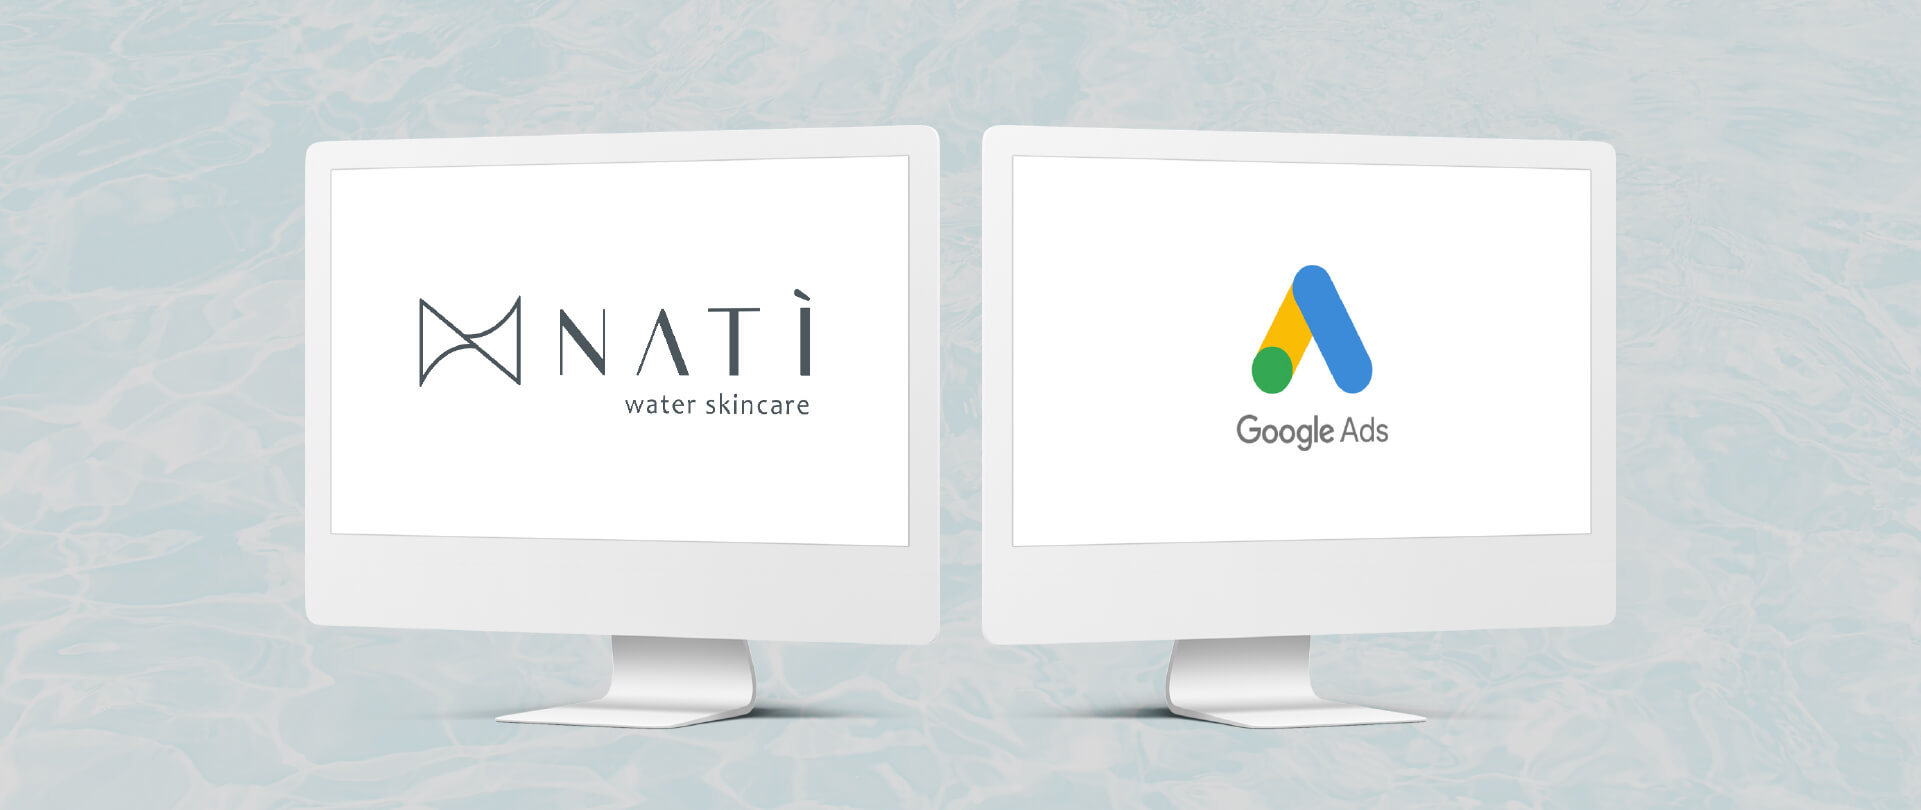 nati-google-ads.jpg